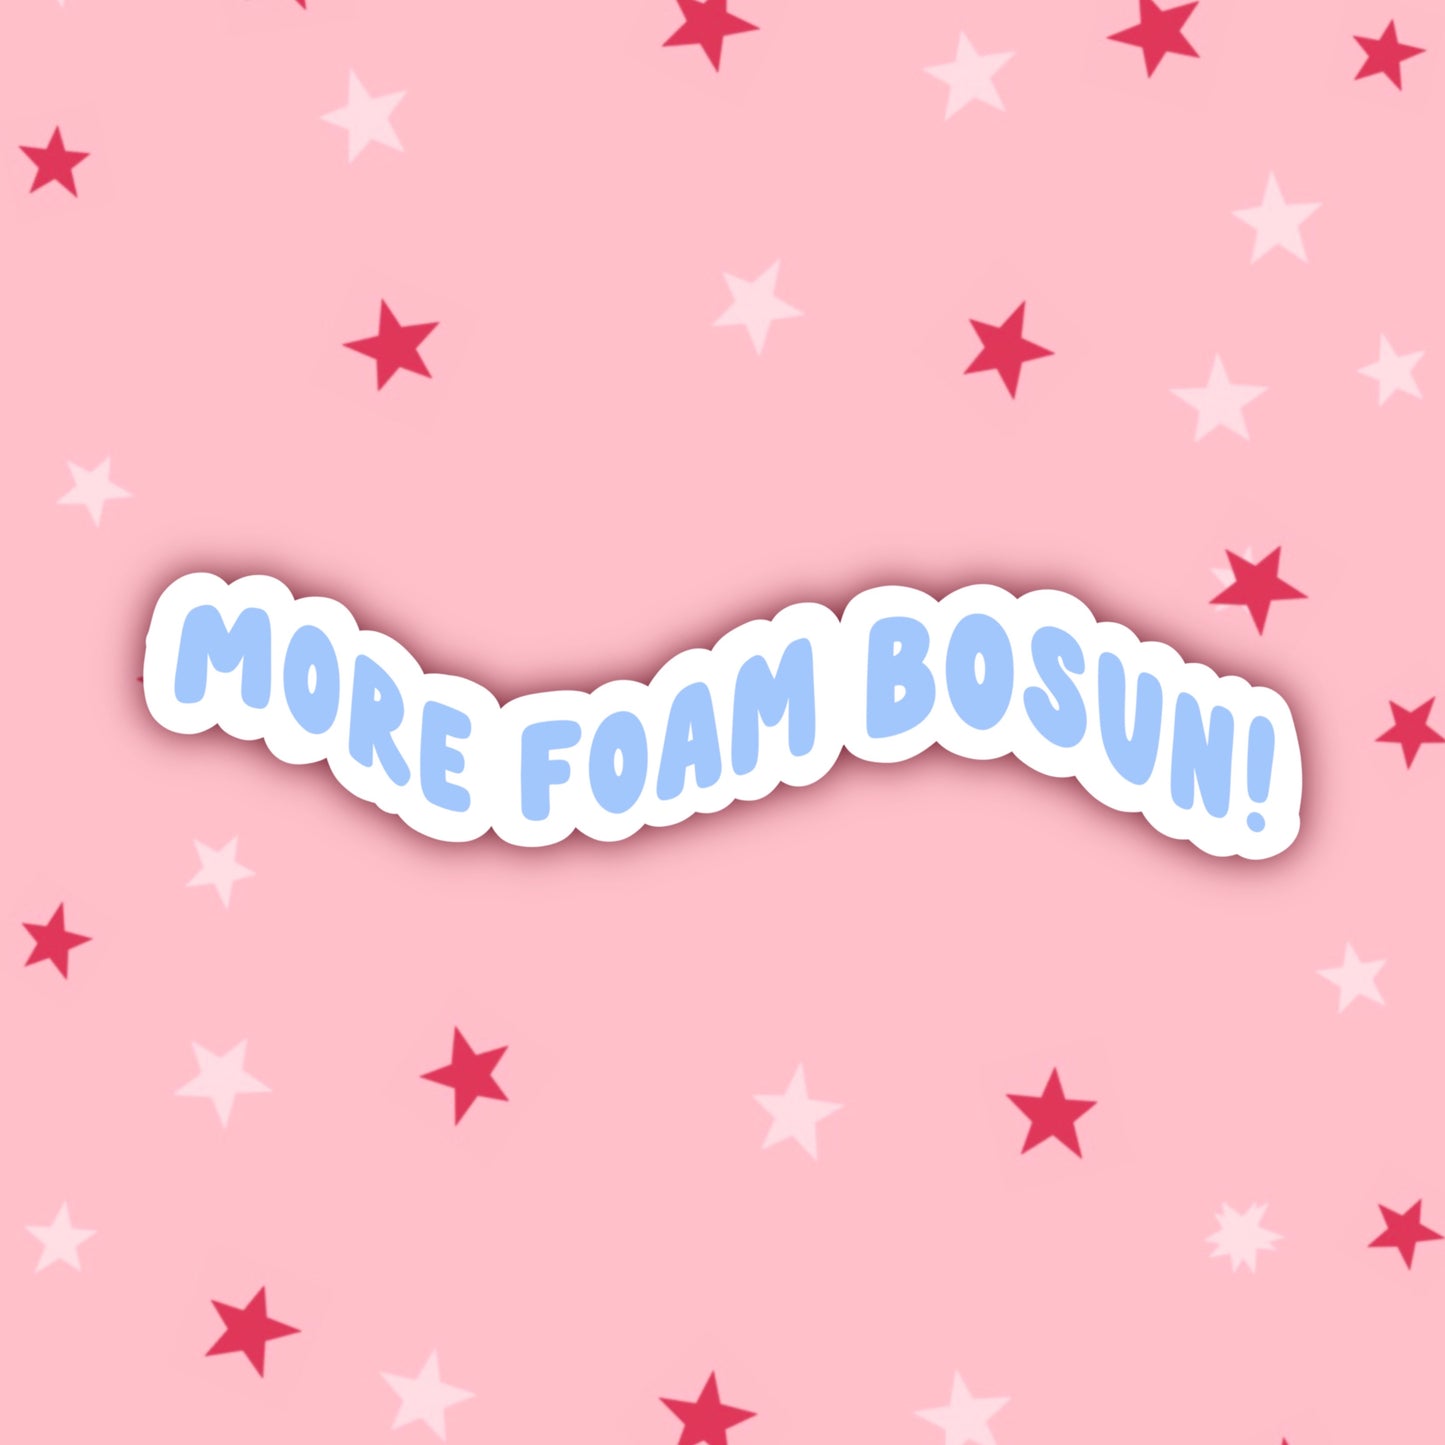 More Foam Bosun | Below Deck